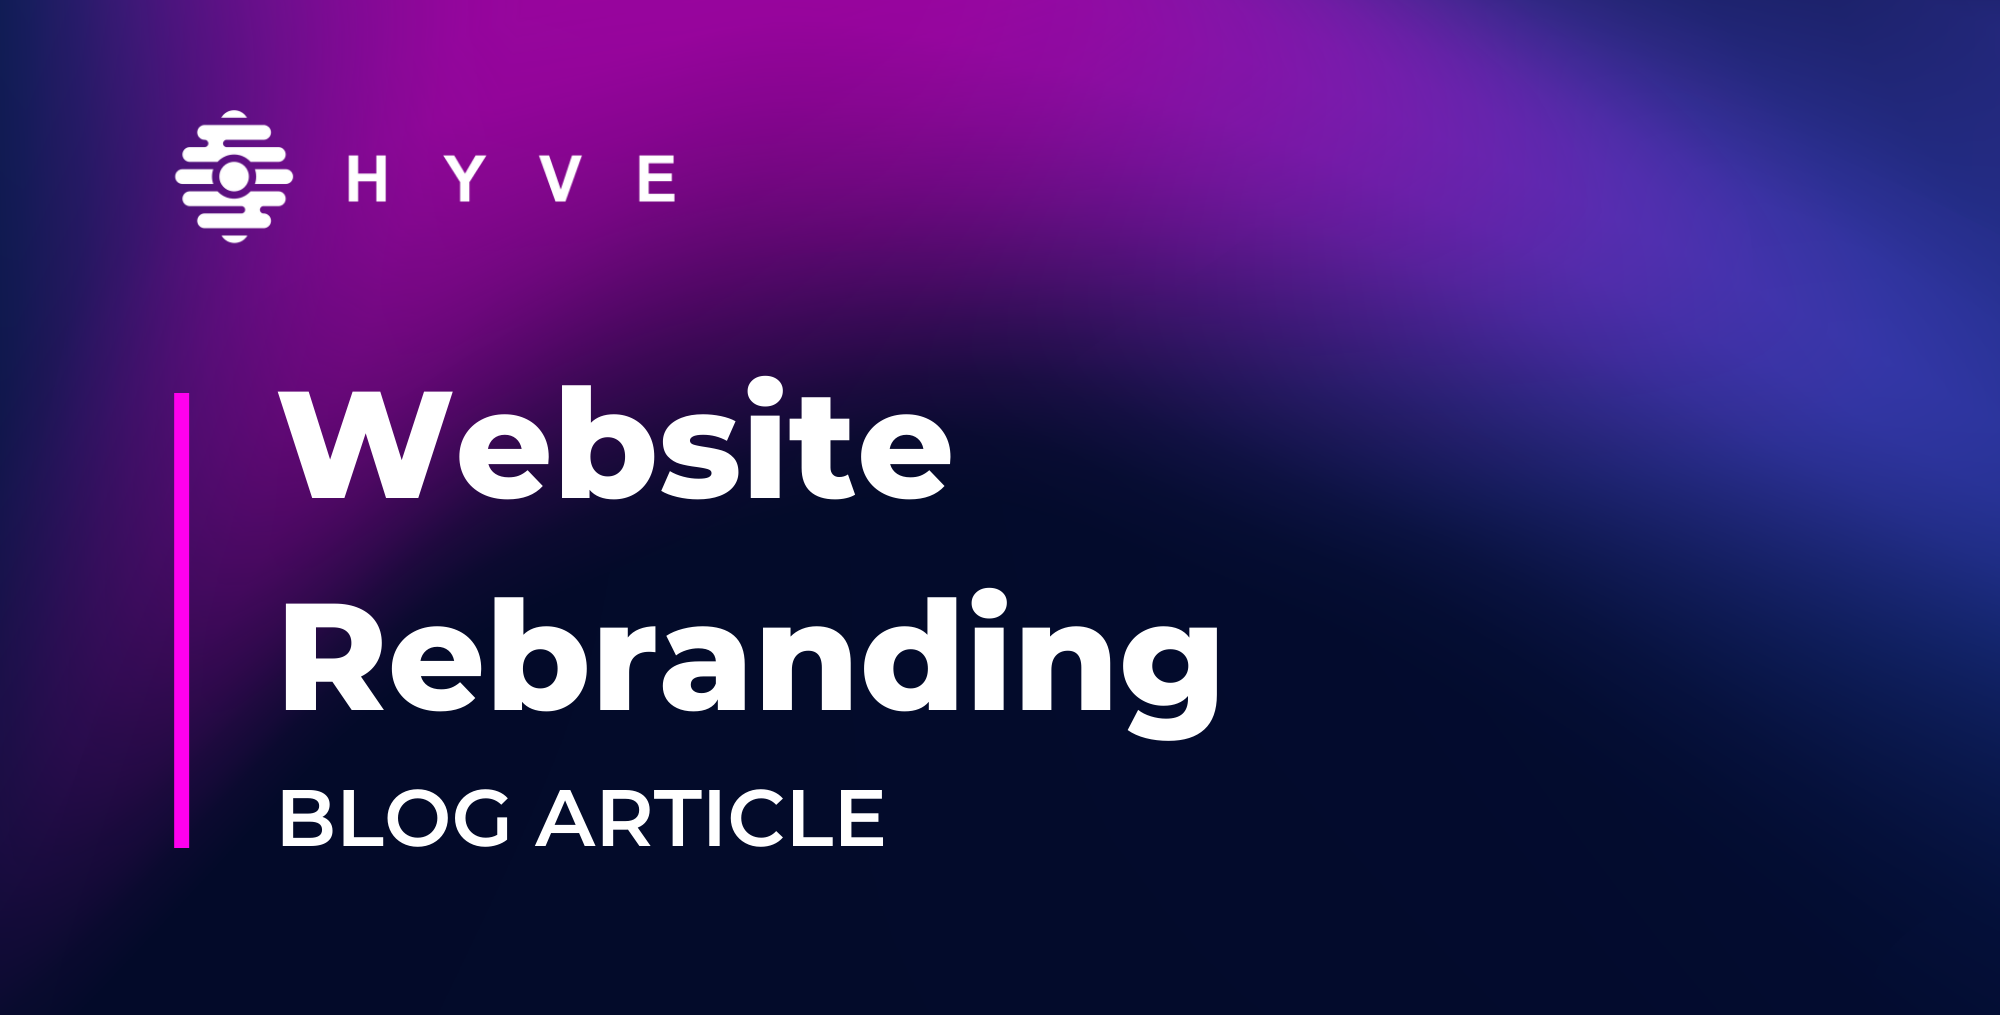 HYVE: Website Rebranding